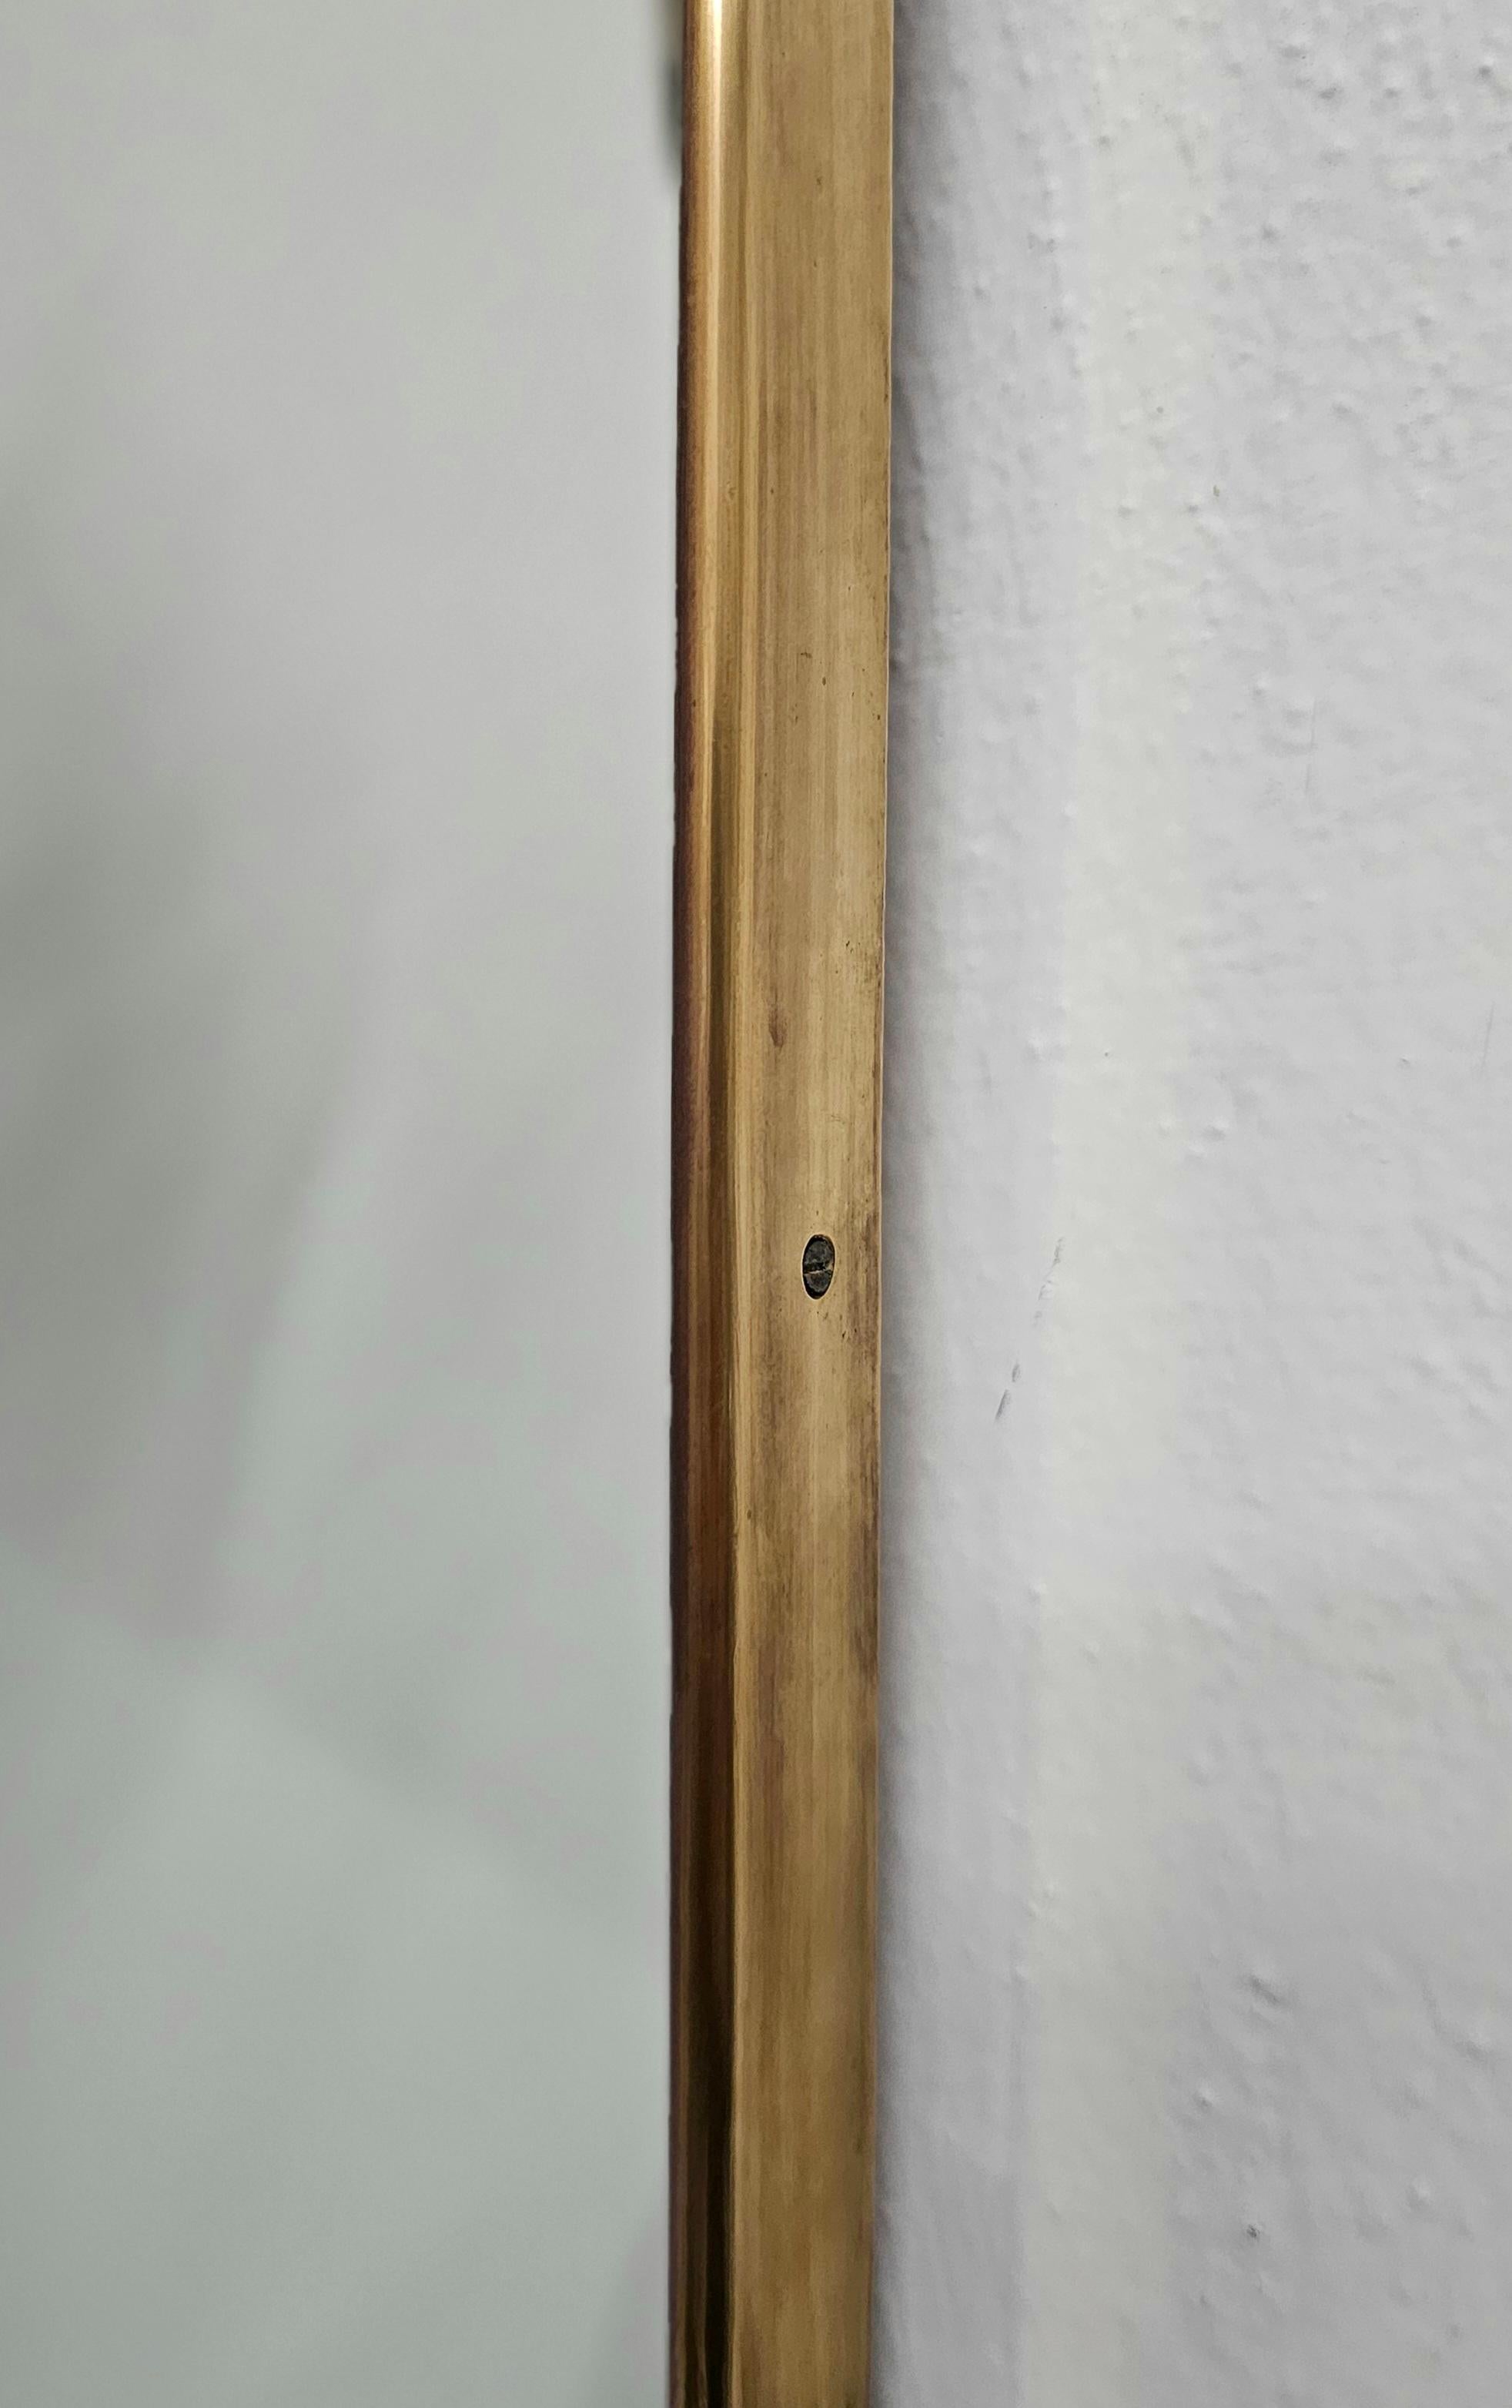 20th Century Wall Mirror Brass Midcentury Modern Italian Design 1950s 1960s For Sale